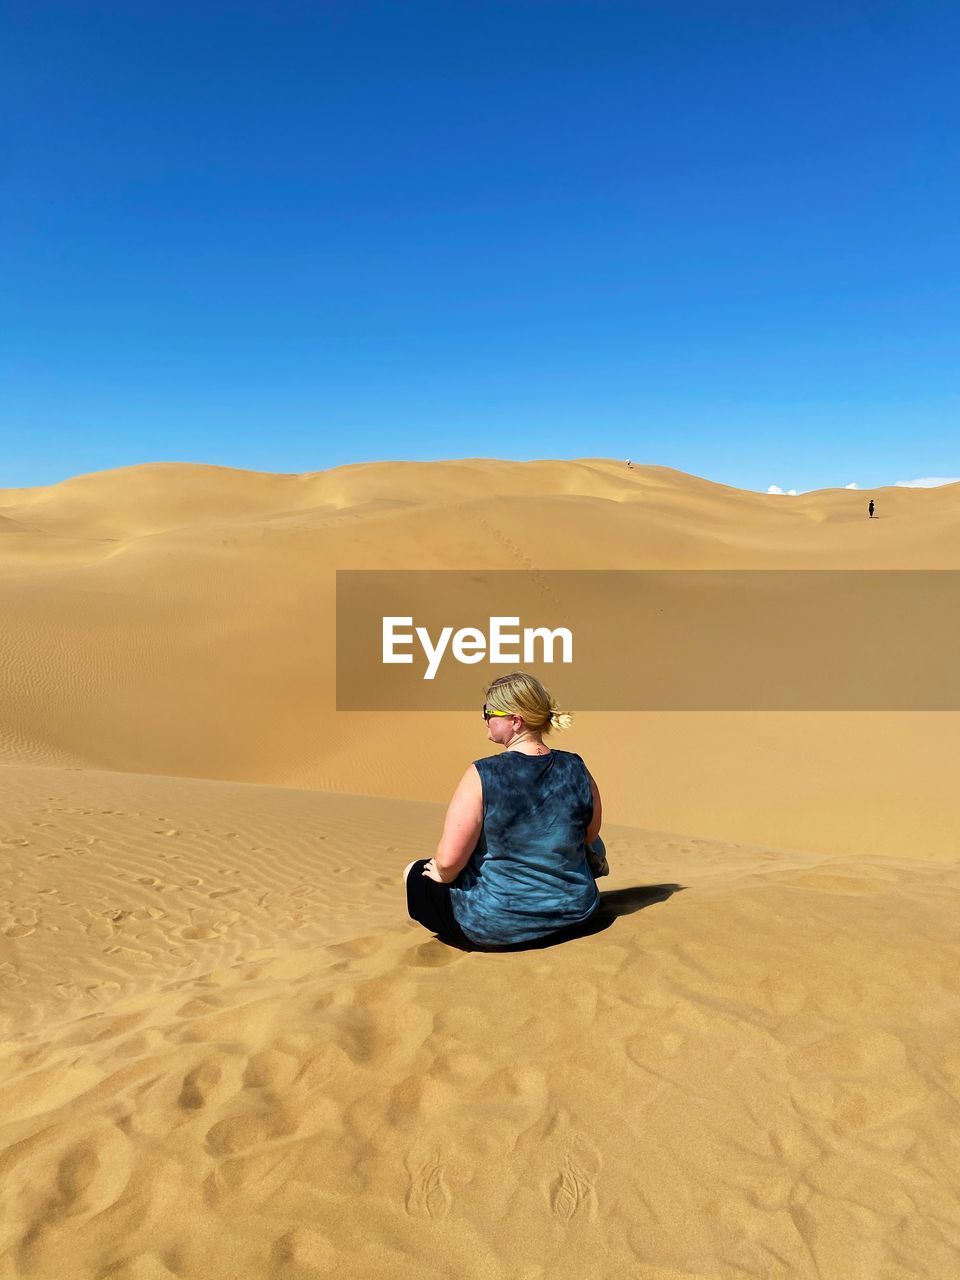 Woman sitting on sand dune in desert against clear sky